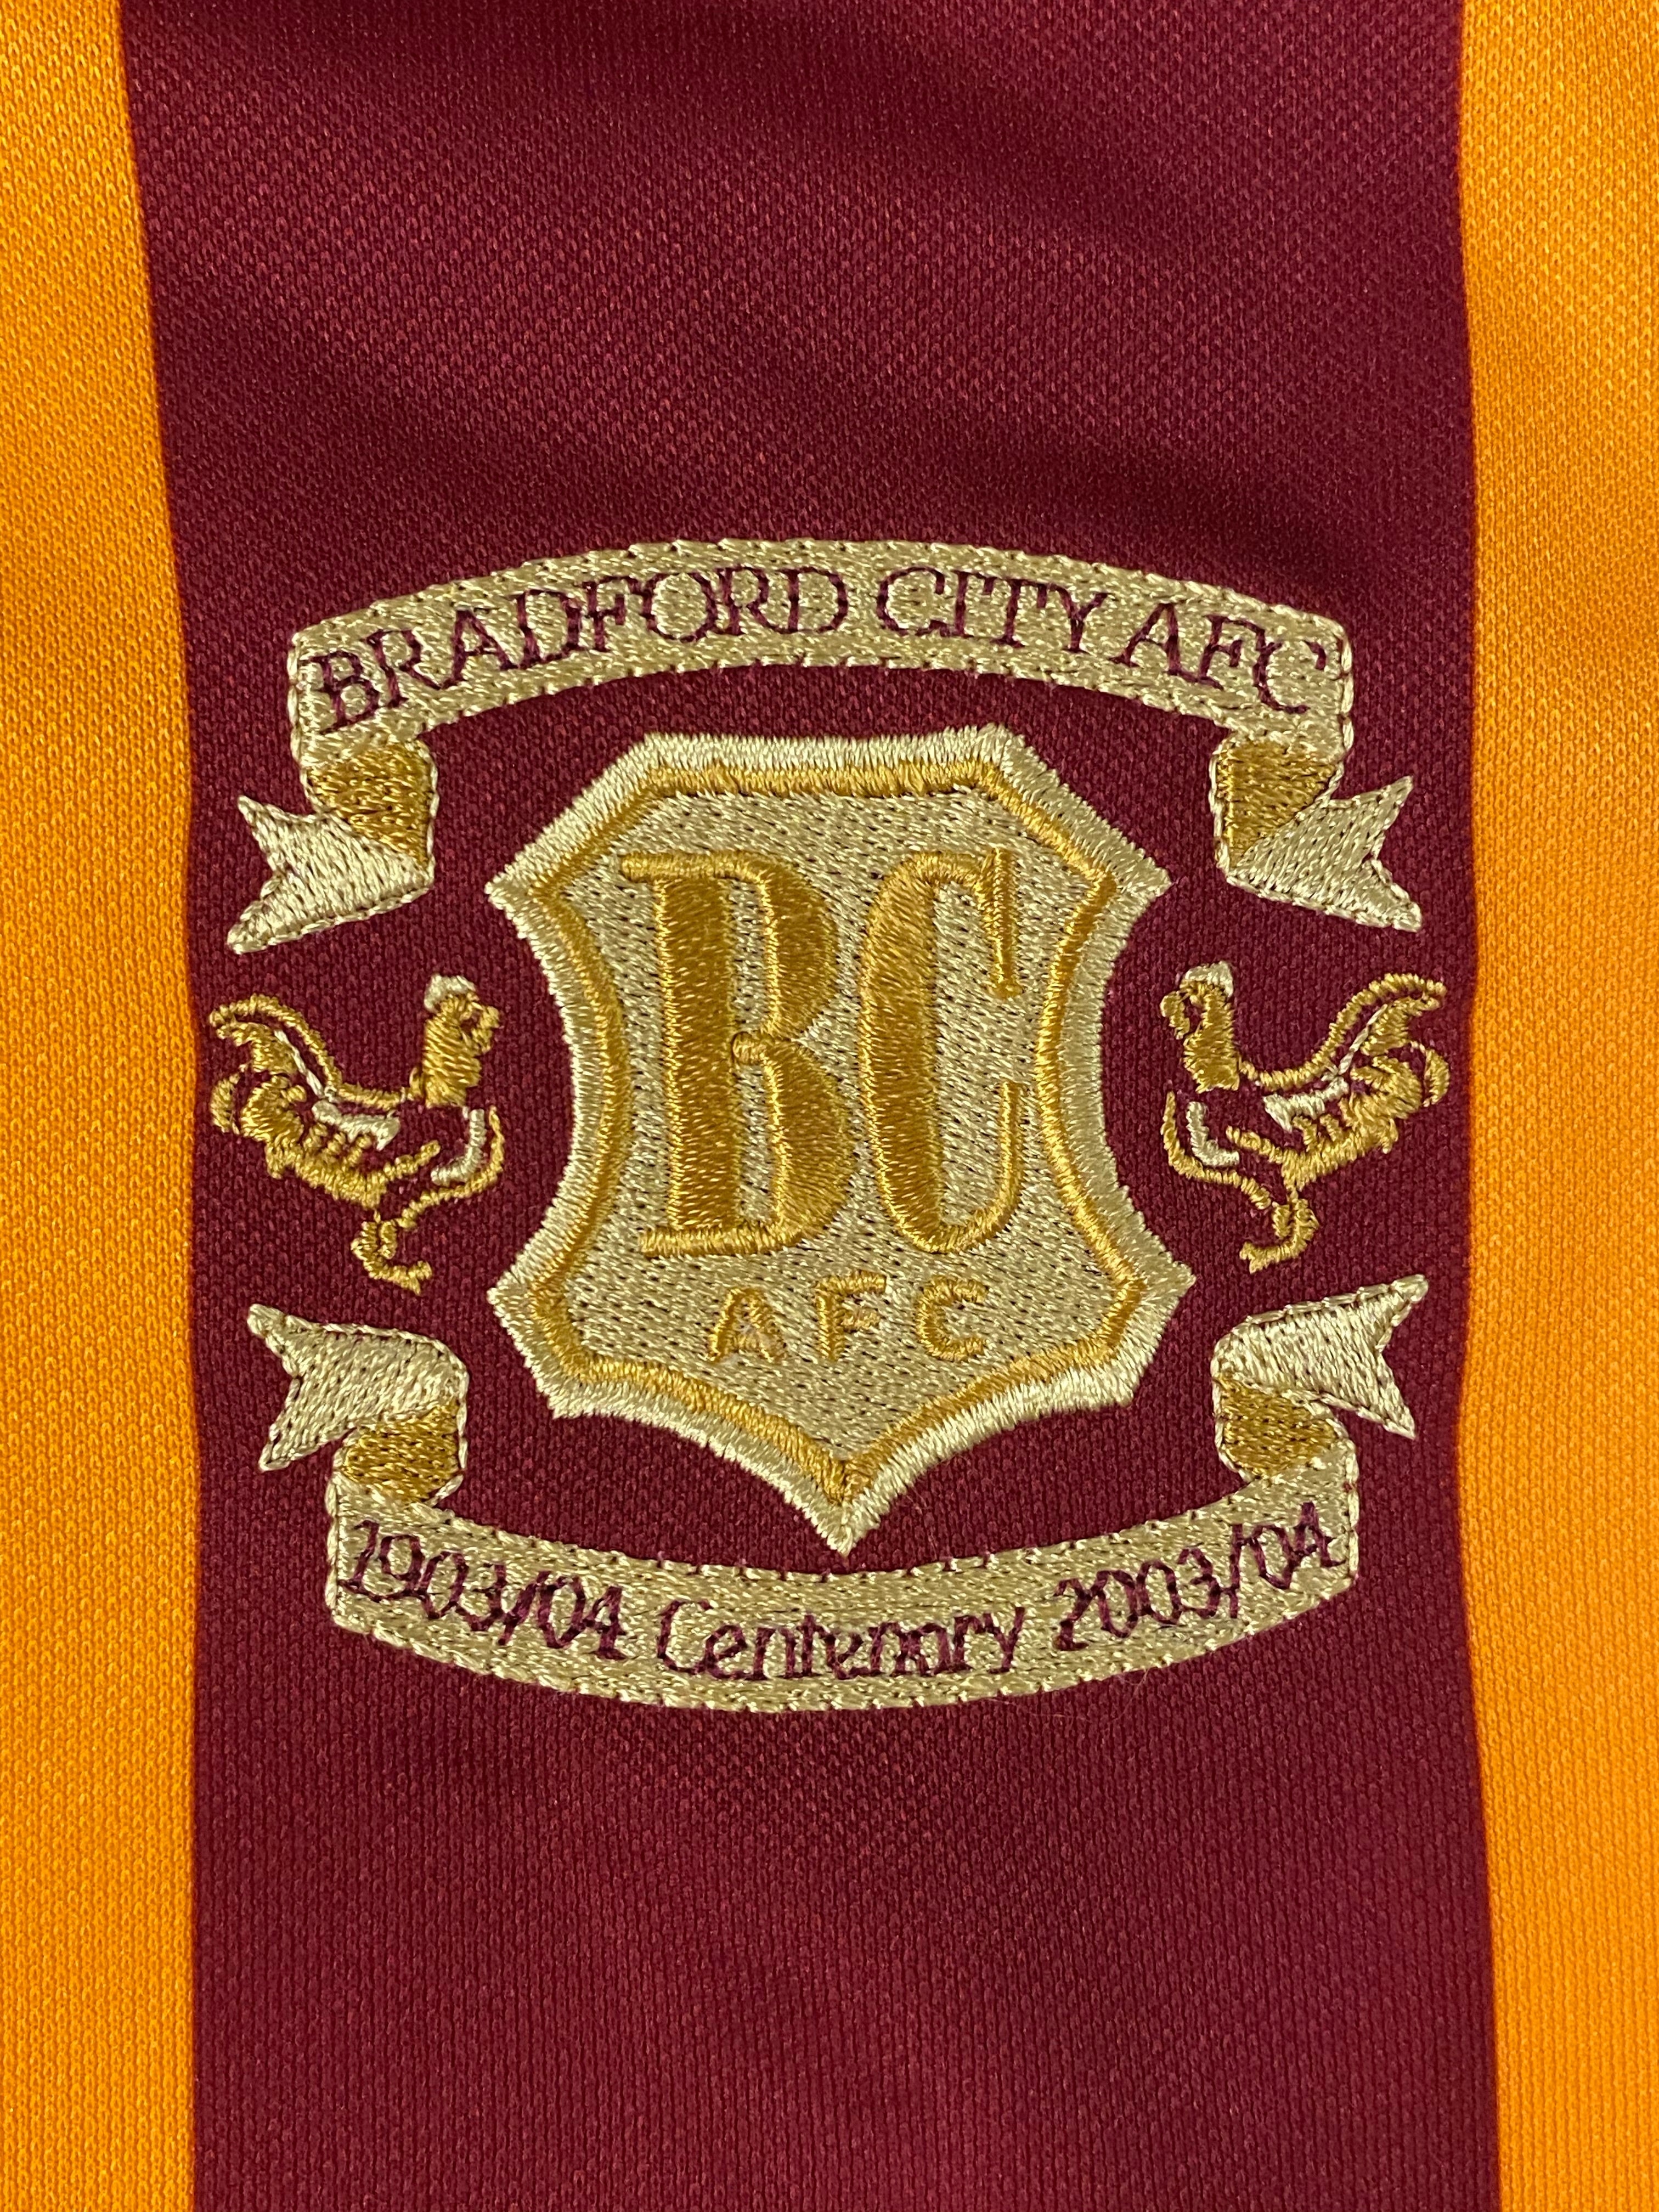 2003/04 Camiseta local del Centenario del Bradford City L / S (L) 8/10